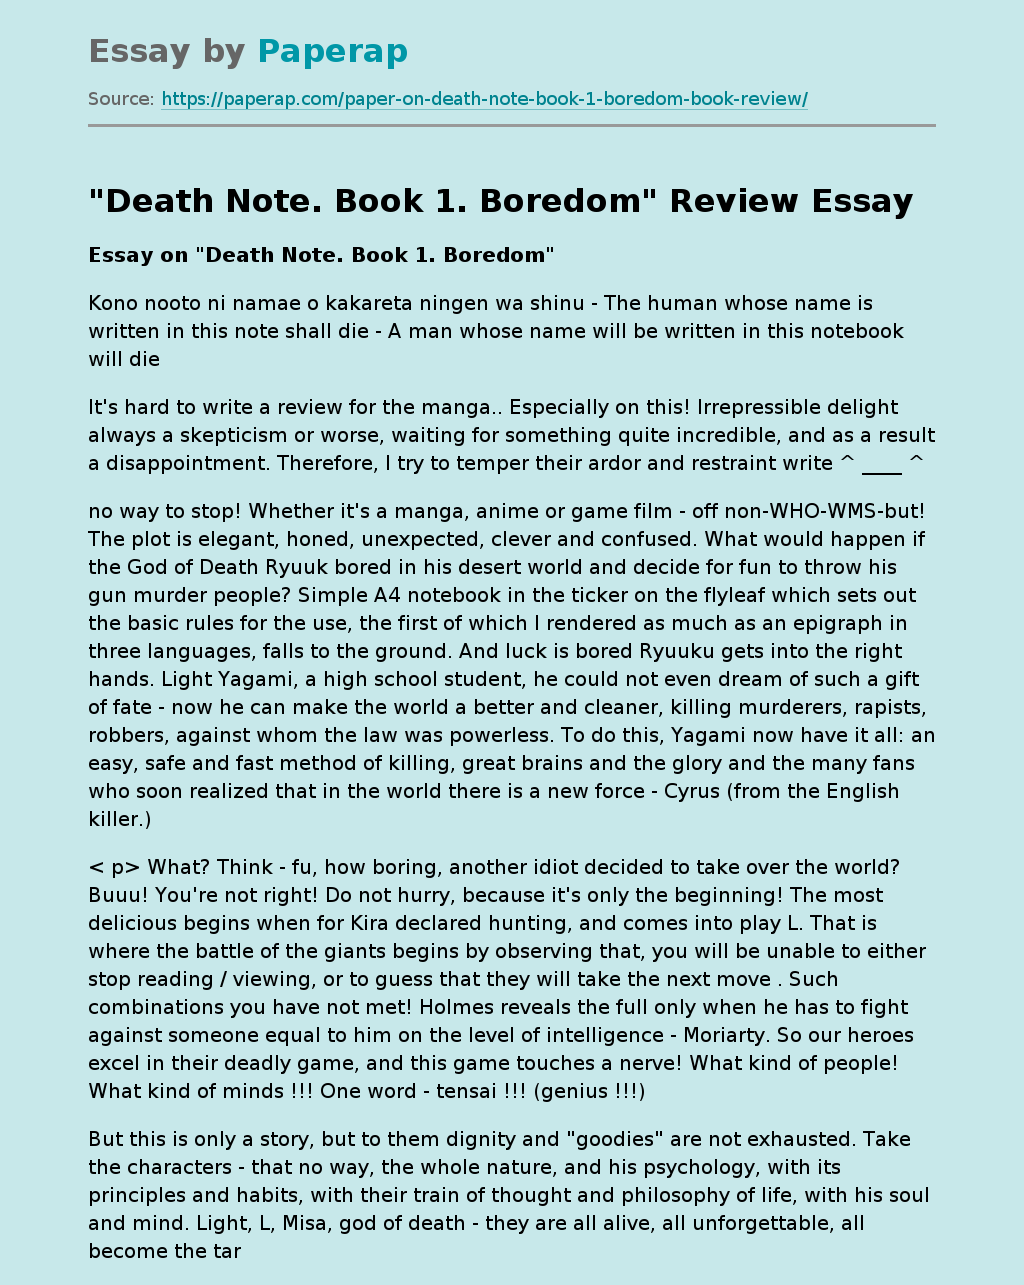 "Death Note. Book 1. Boredom" Review